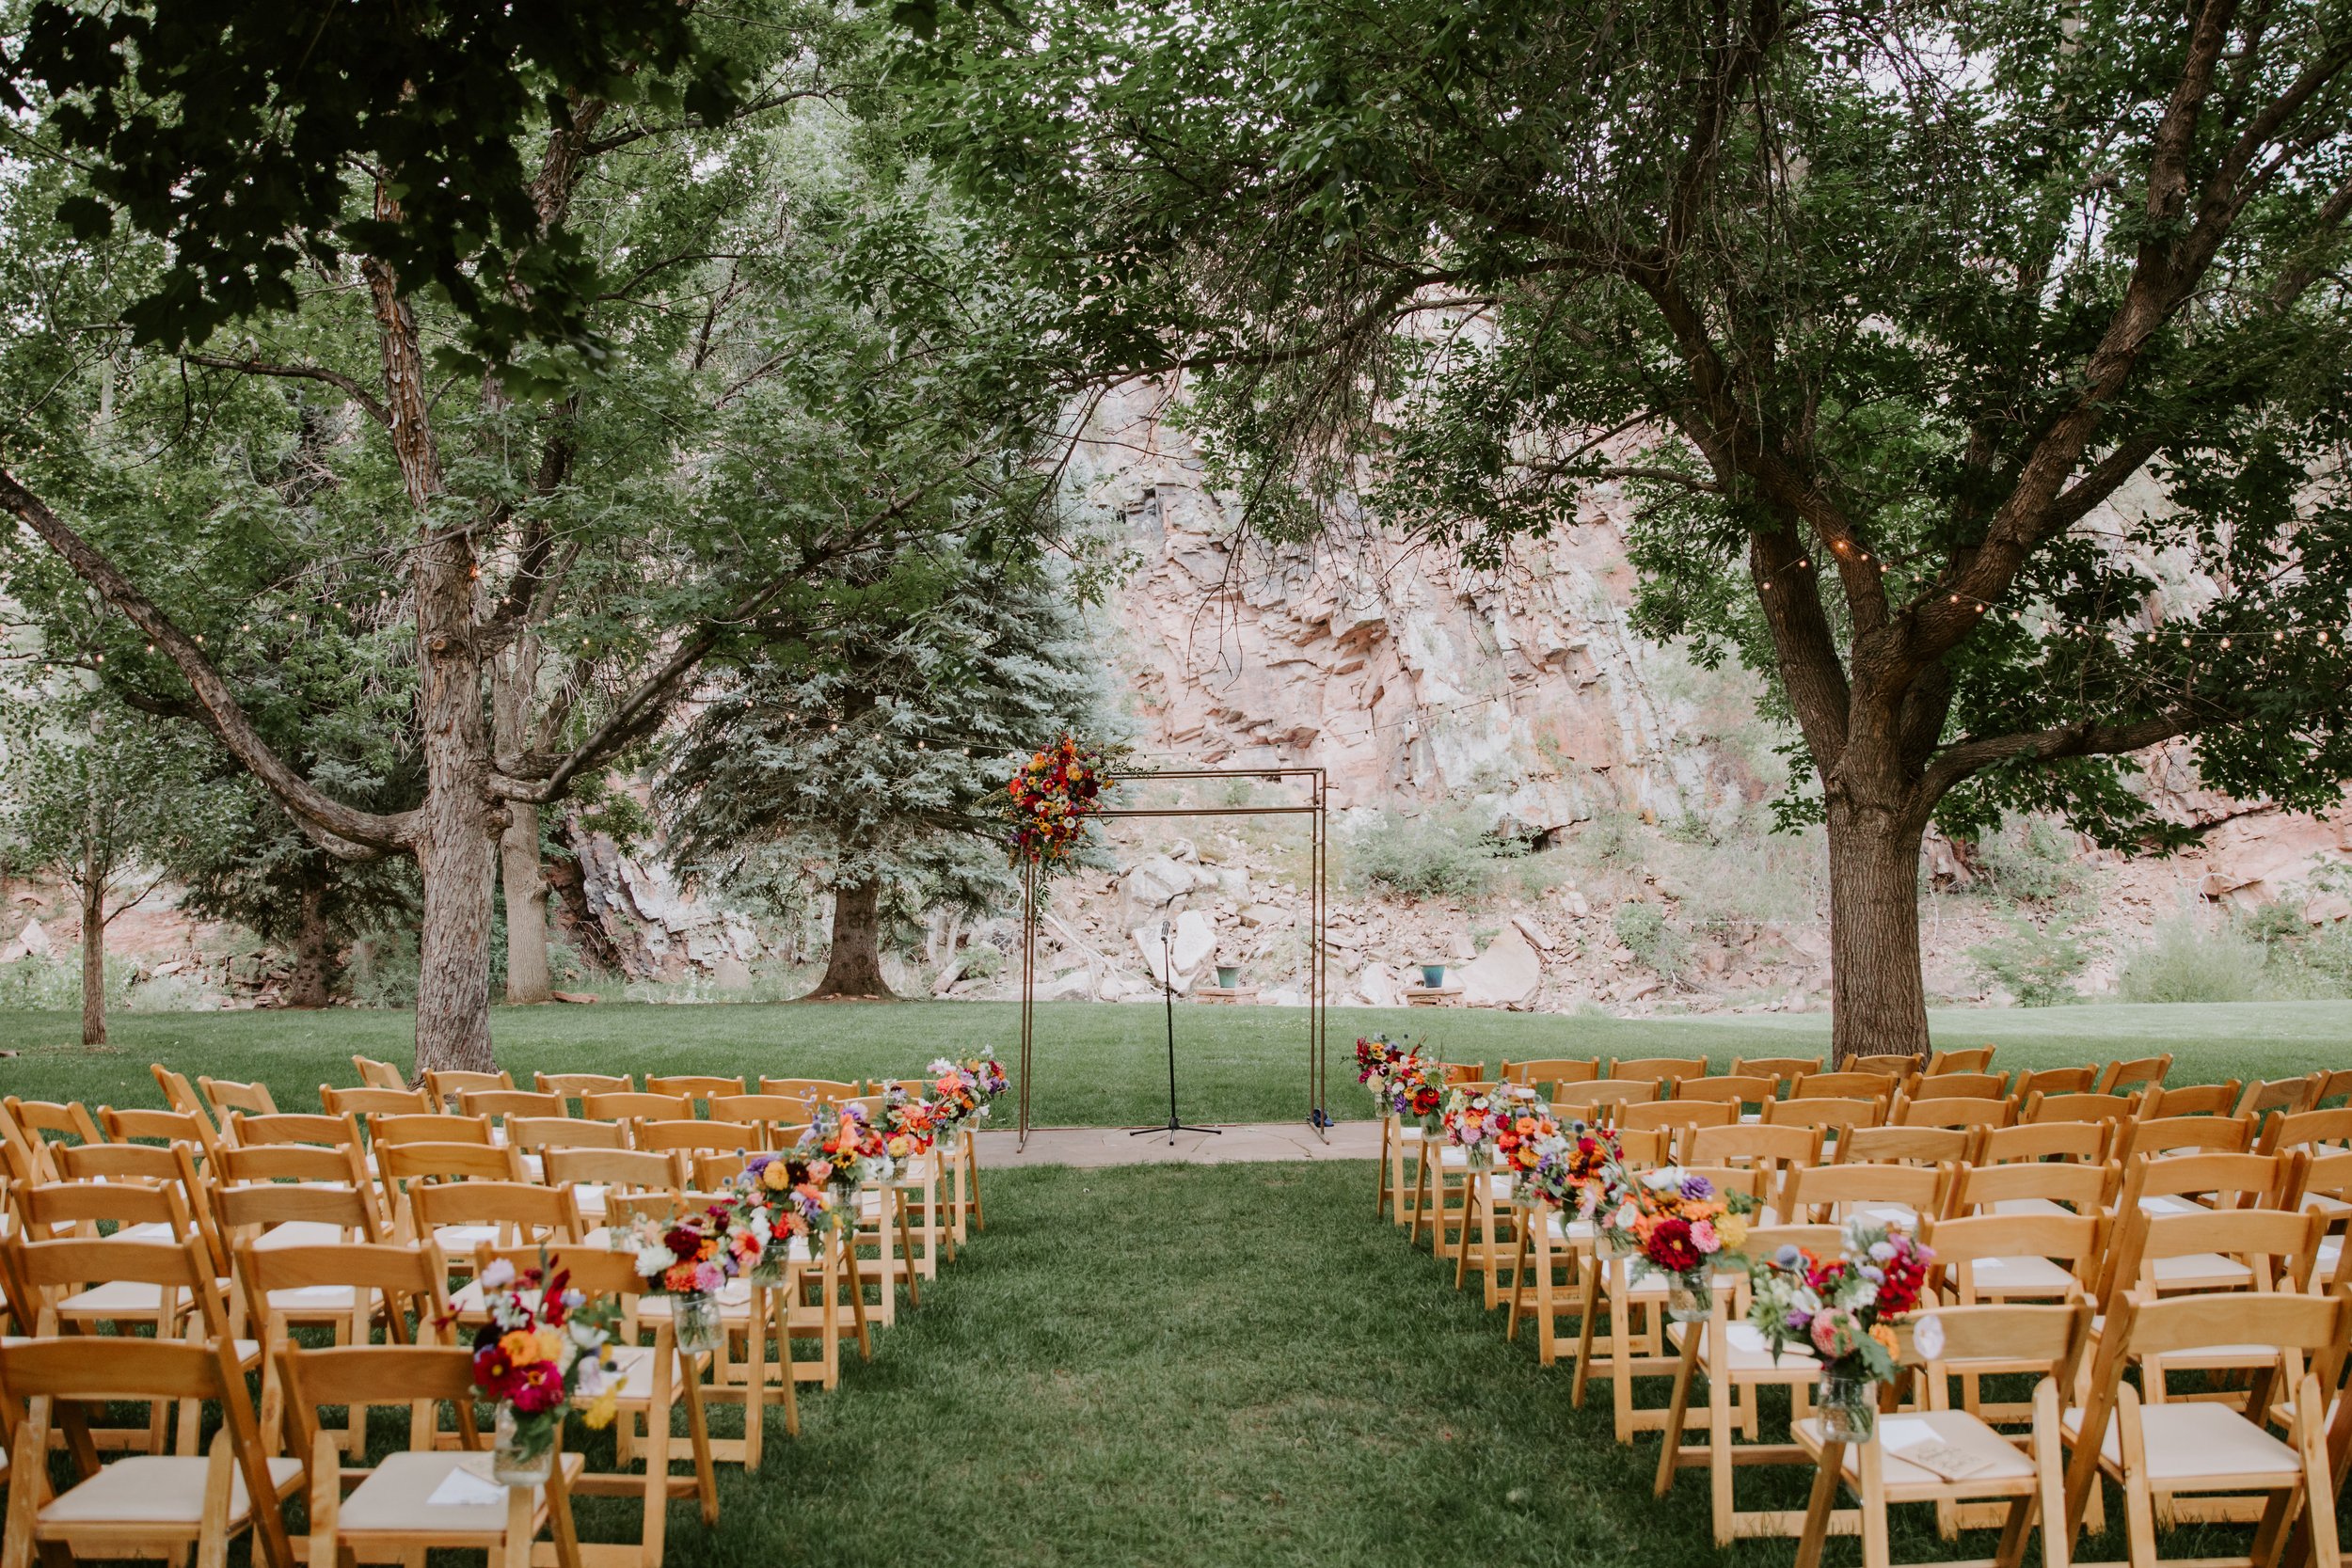 Plume&Furrow-Wedding-Florist-Sarah&Jordan-AshleyTiedgenPhotography-River-Bend-August-Colorado-Ceremony-Space-Arbor-Decor.jpg